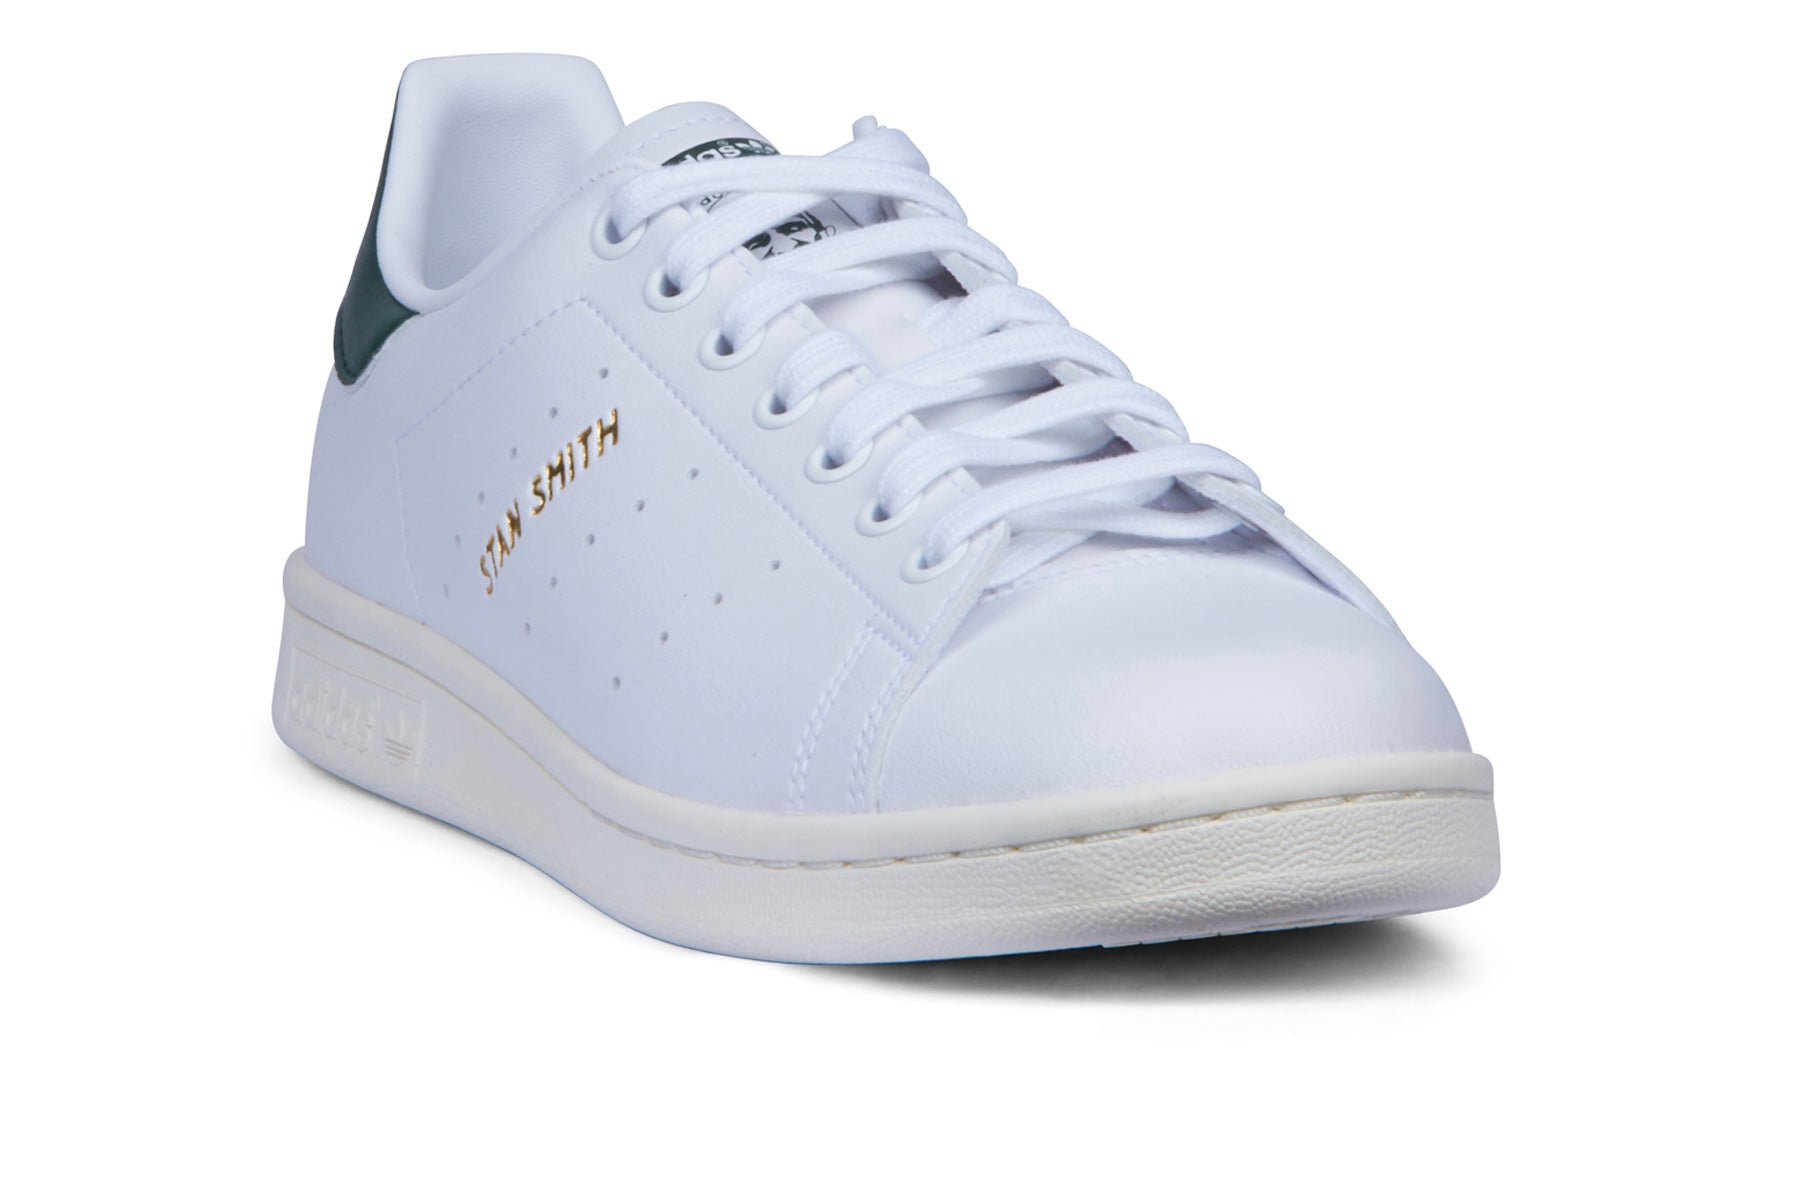 Adidas Stan Smith - Cloud White / Collegiate Green / Off White